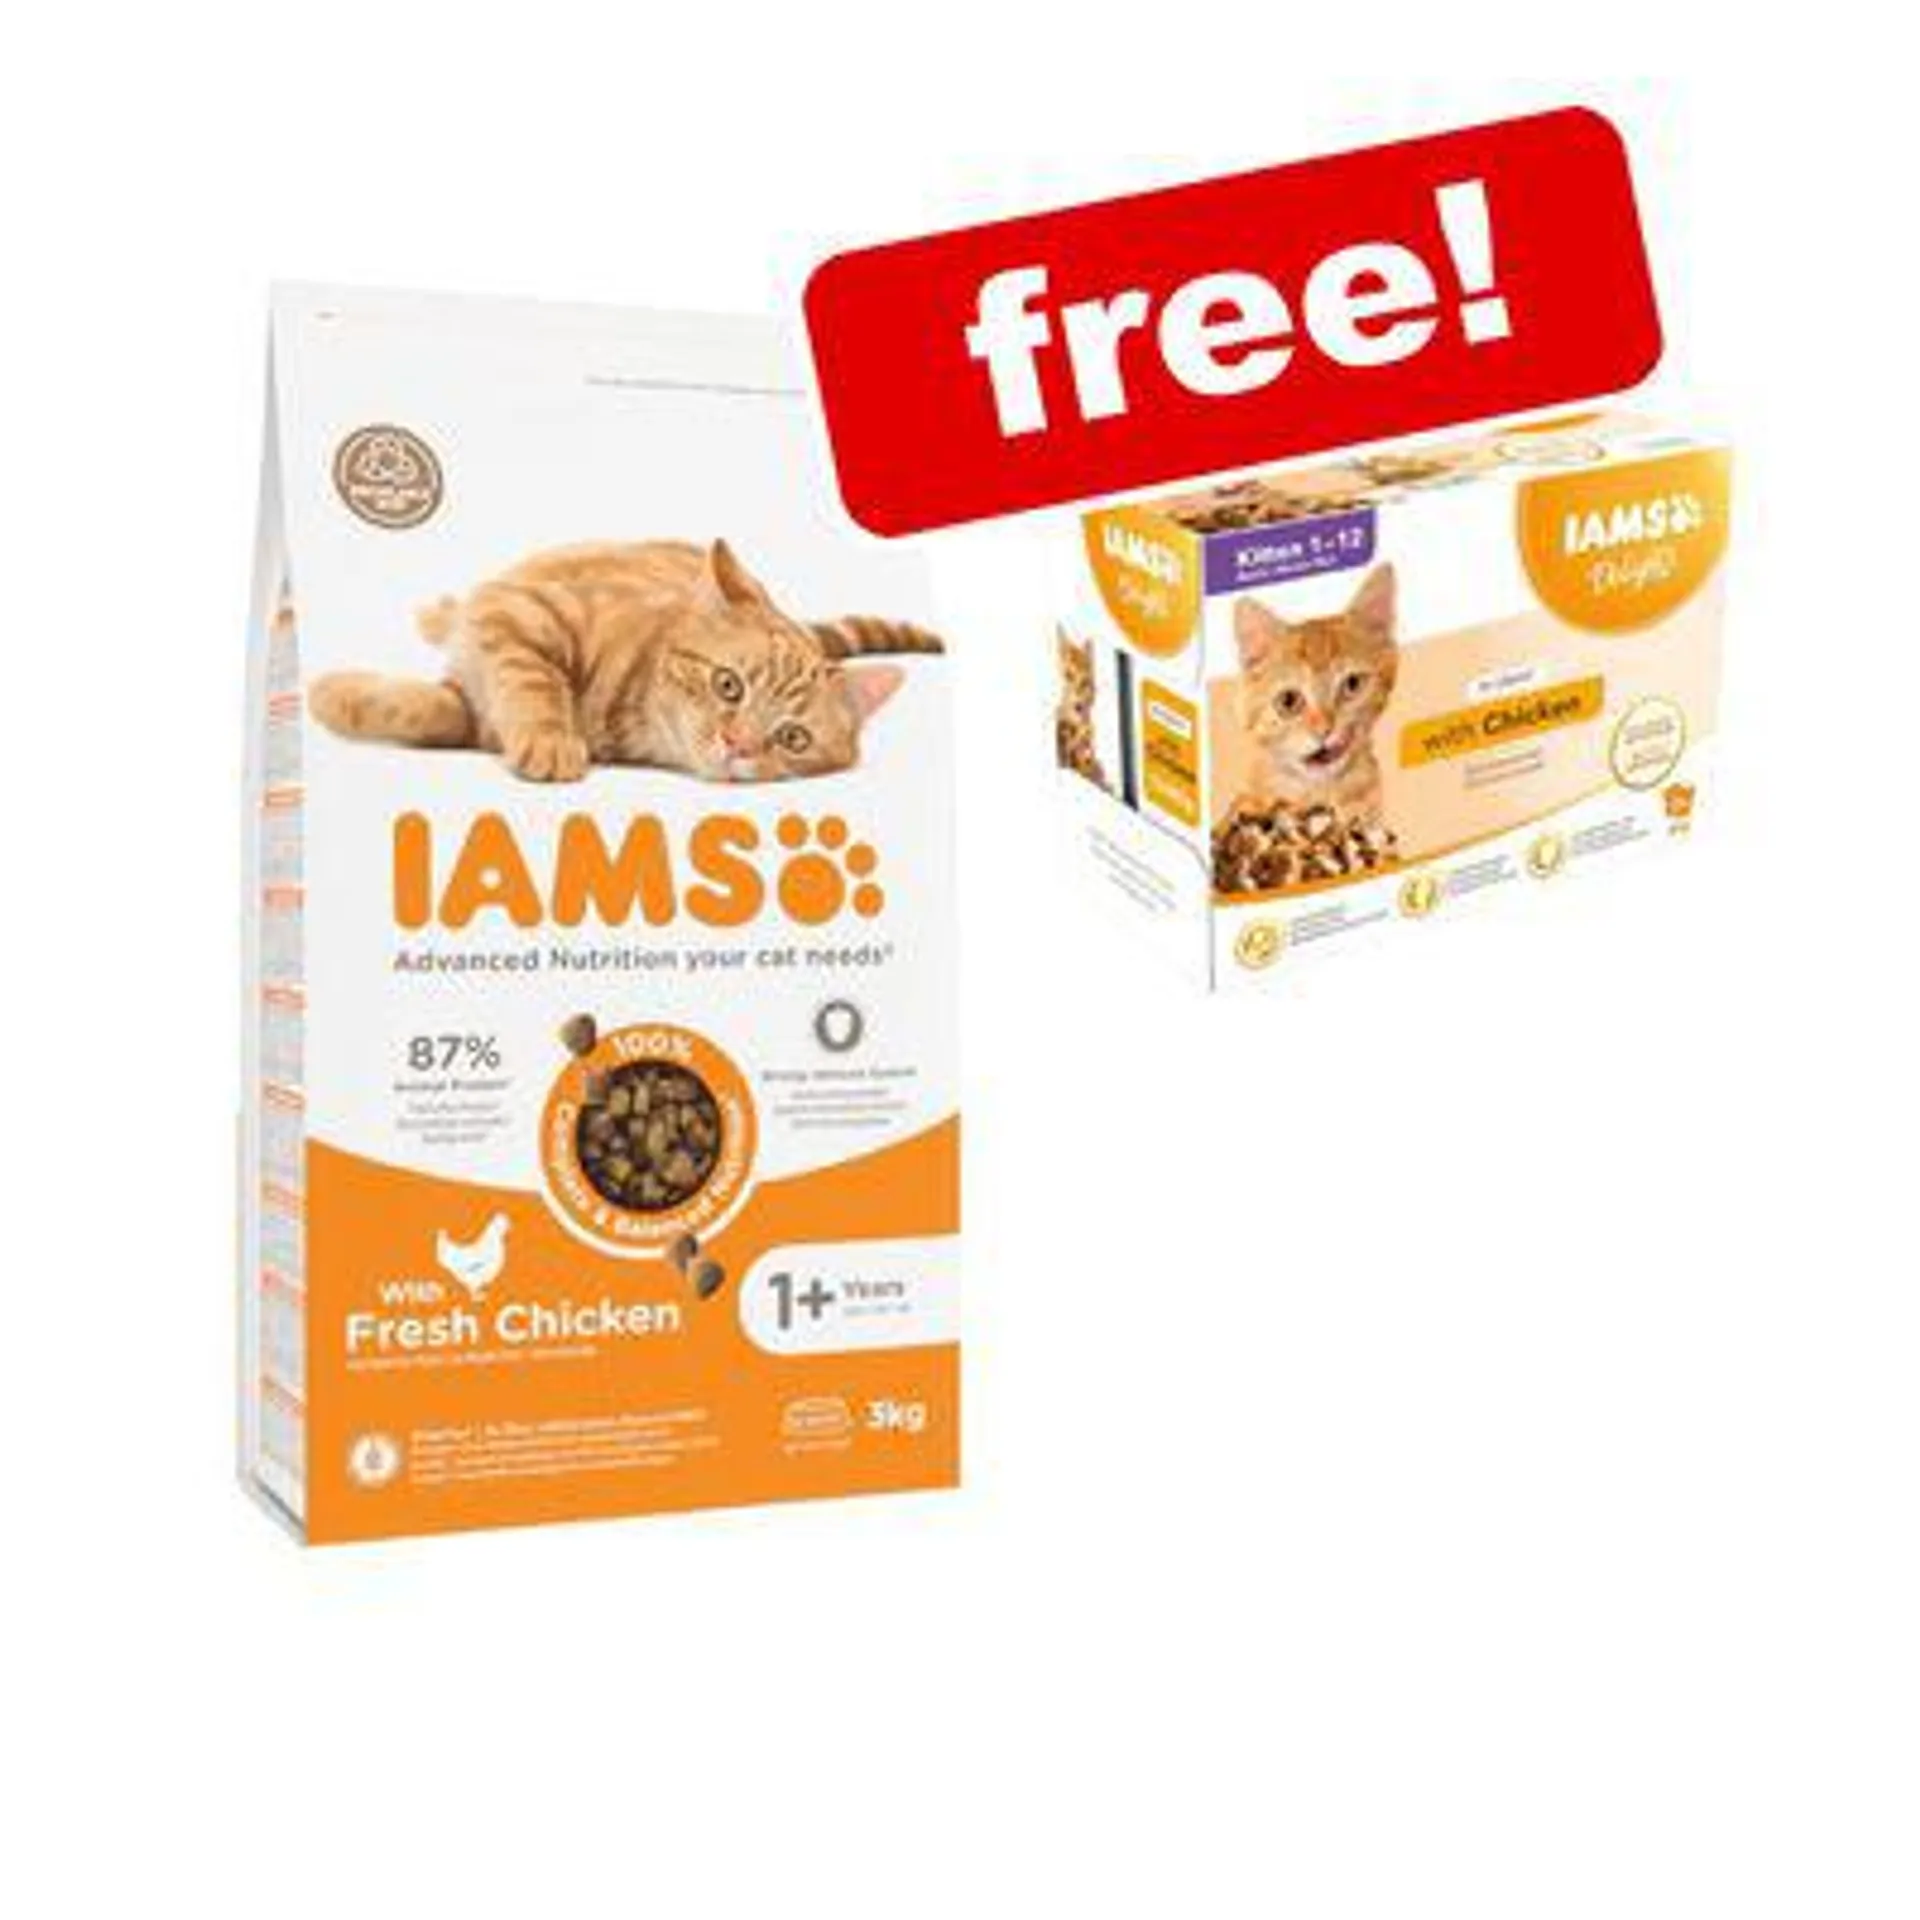 2 x 3kg IAMS Dry Kitten Food + 12 x 85g IAMS Delights Wet Food Free! *